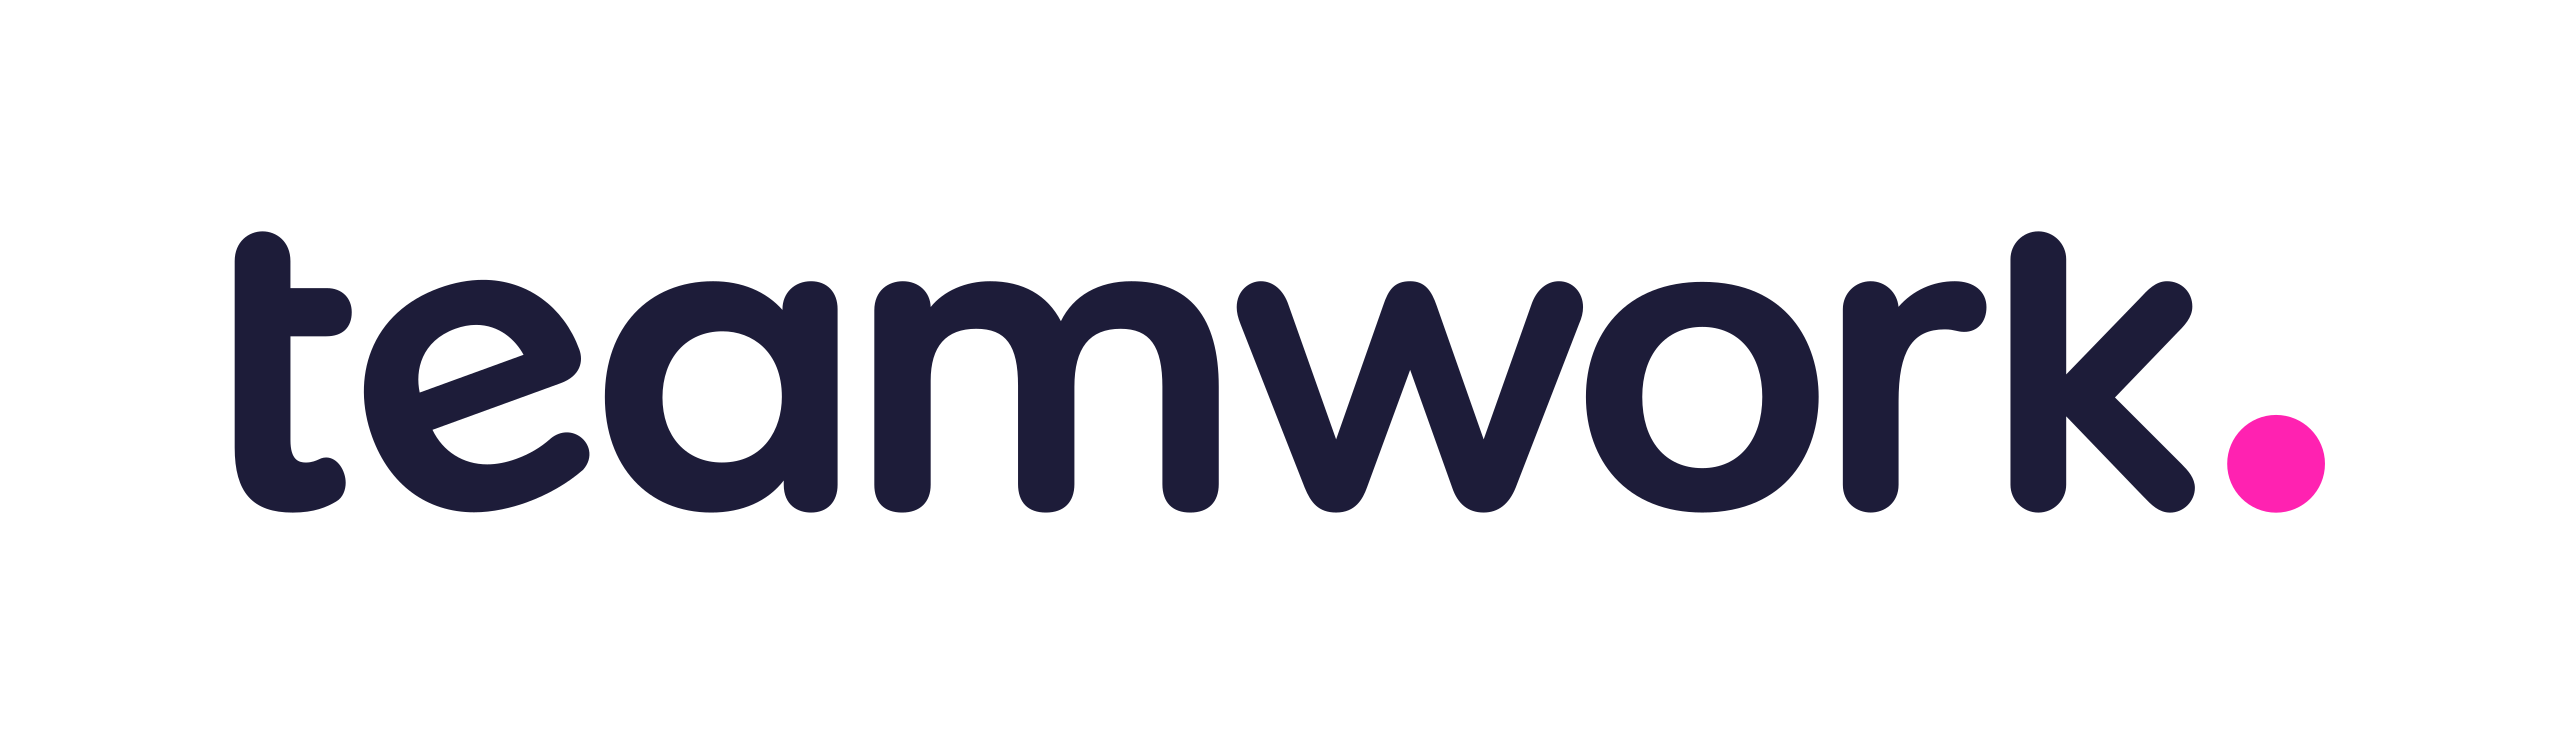 File:Teamwork-logo.svg - Wikipedia